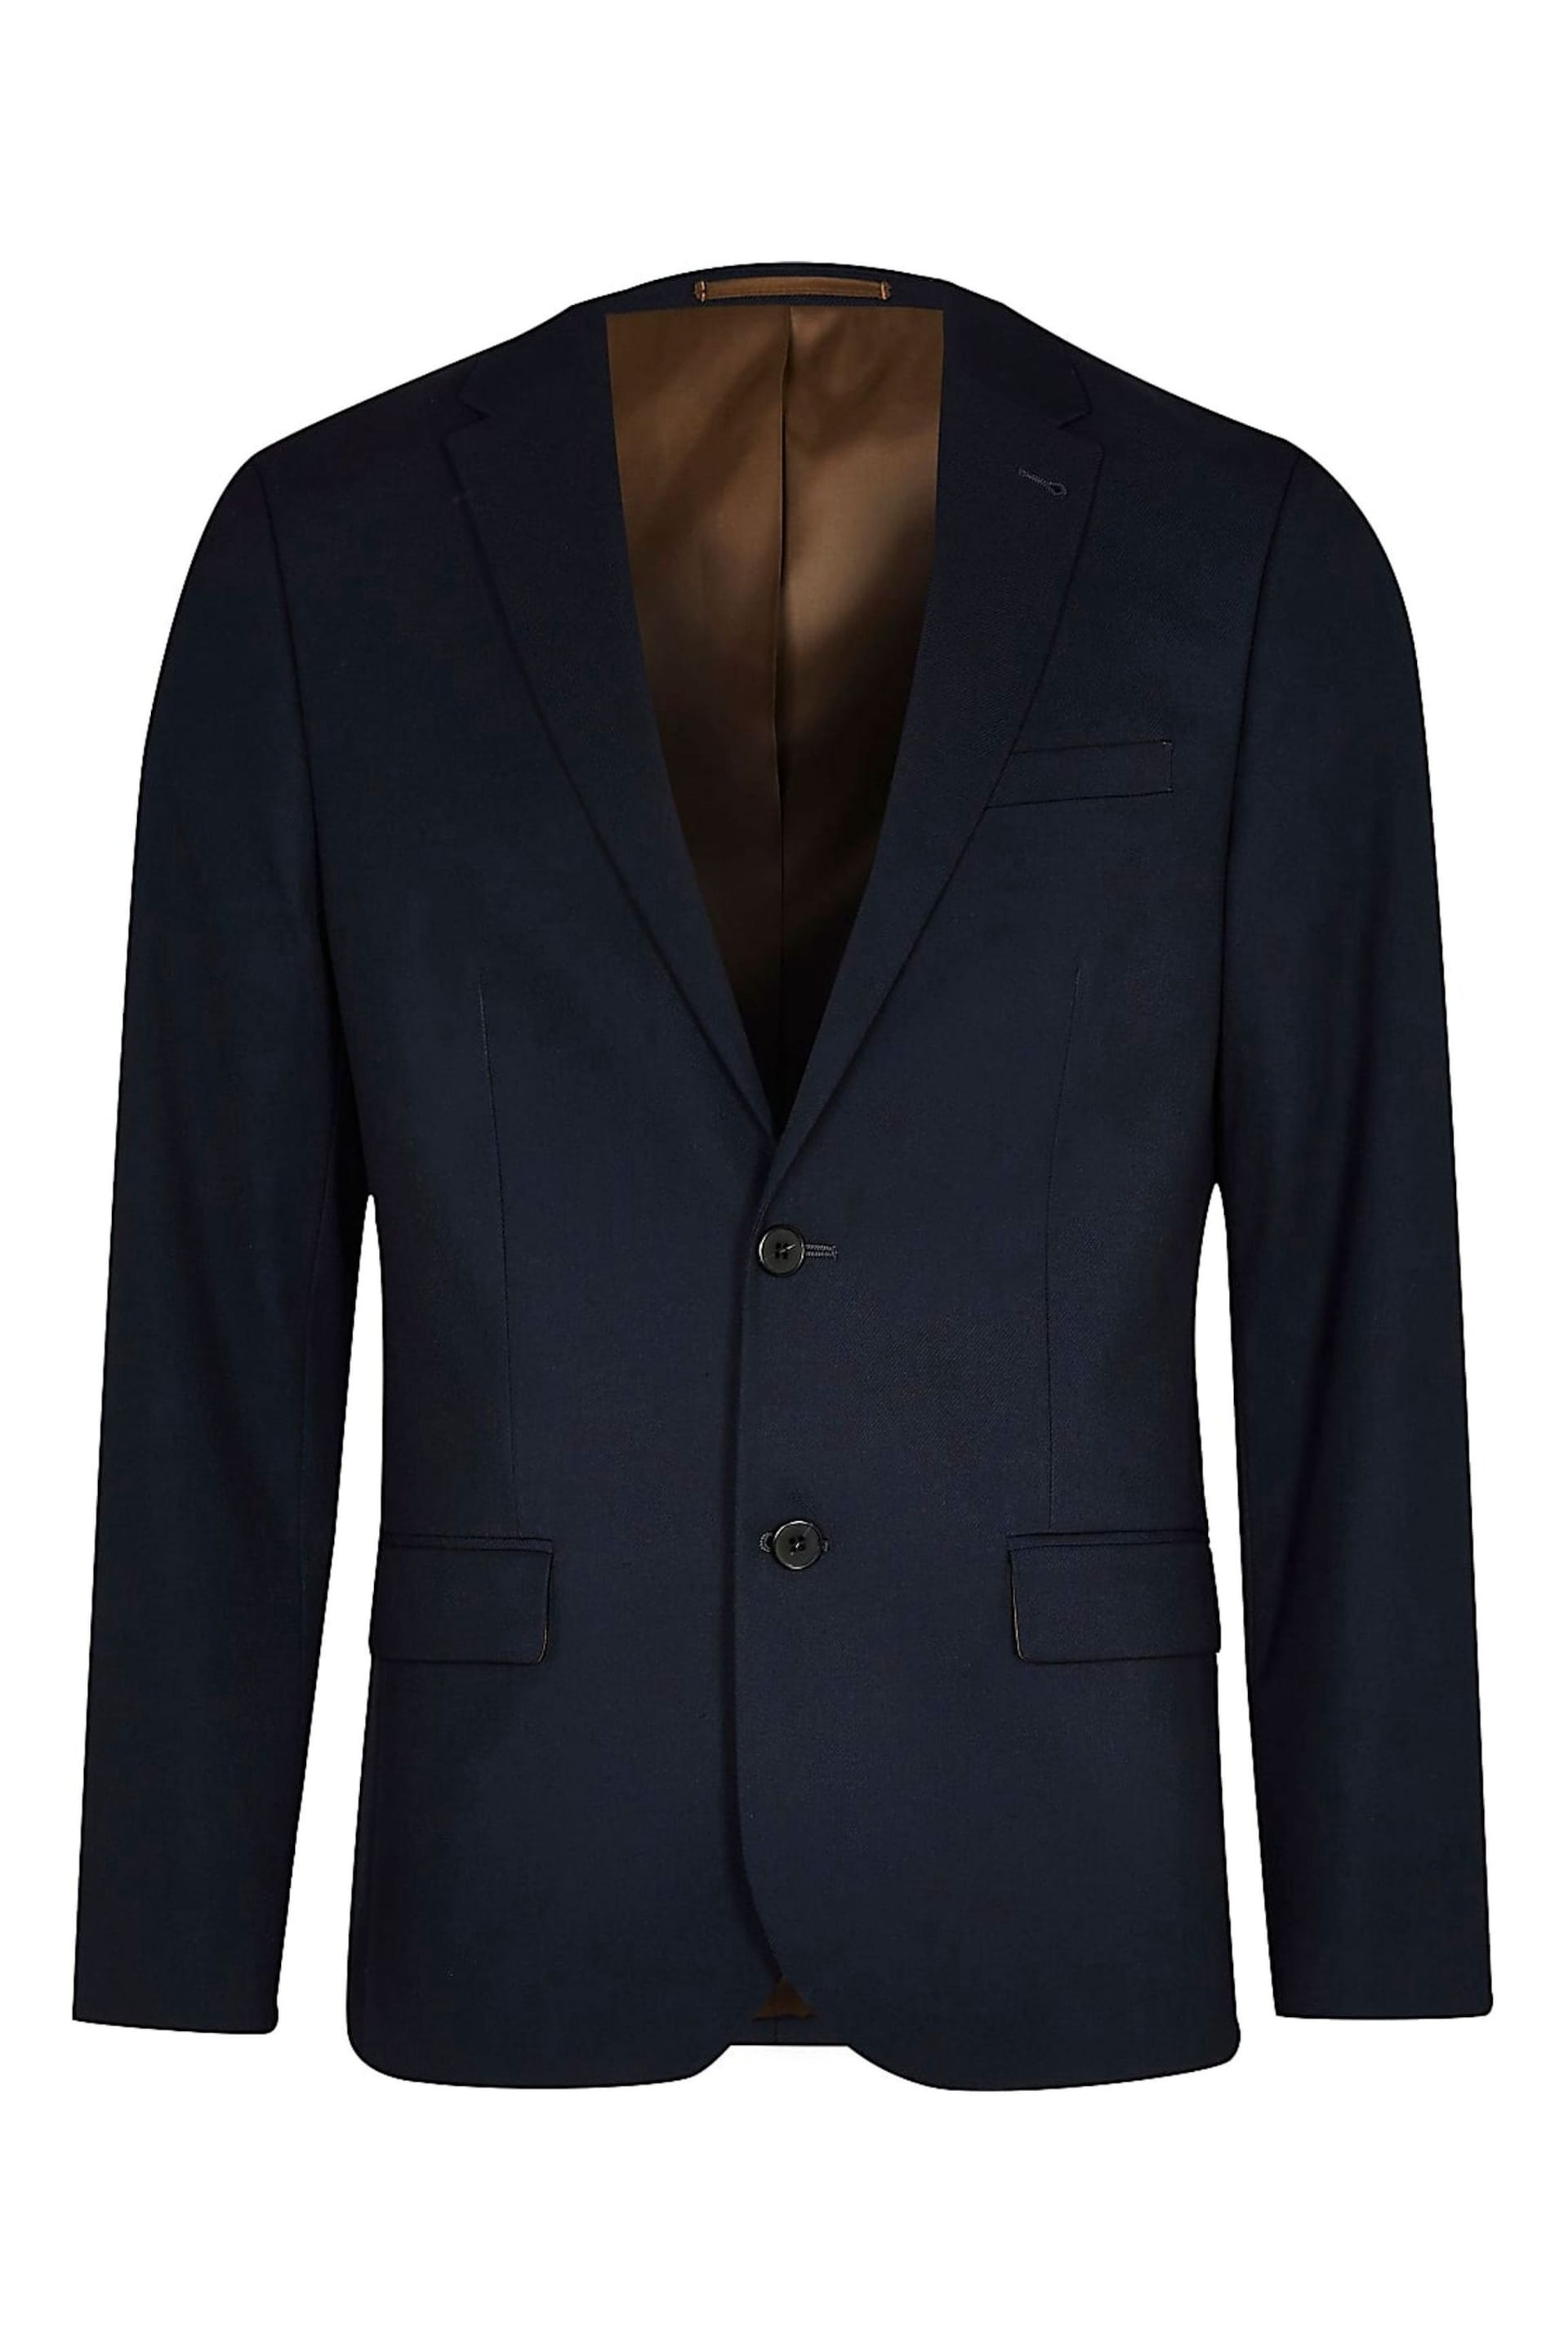 River Island Dark blue Skinny Twill Suit Jacket - Image 5 of 5